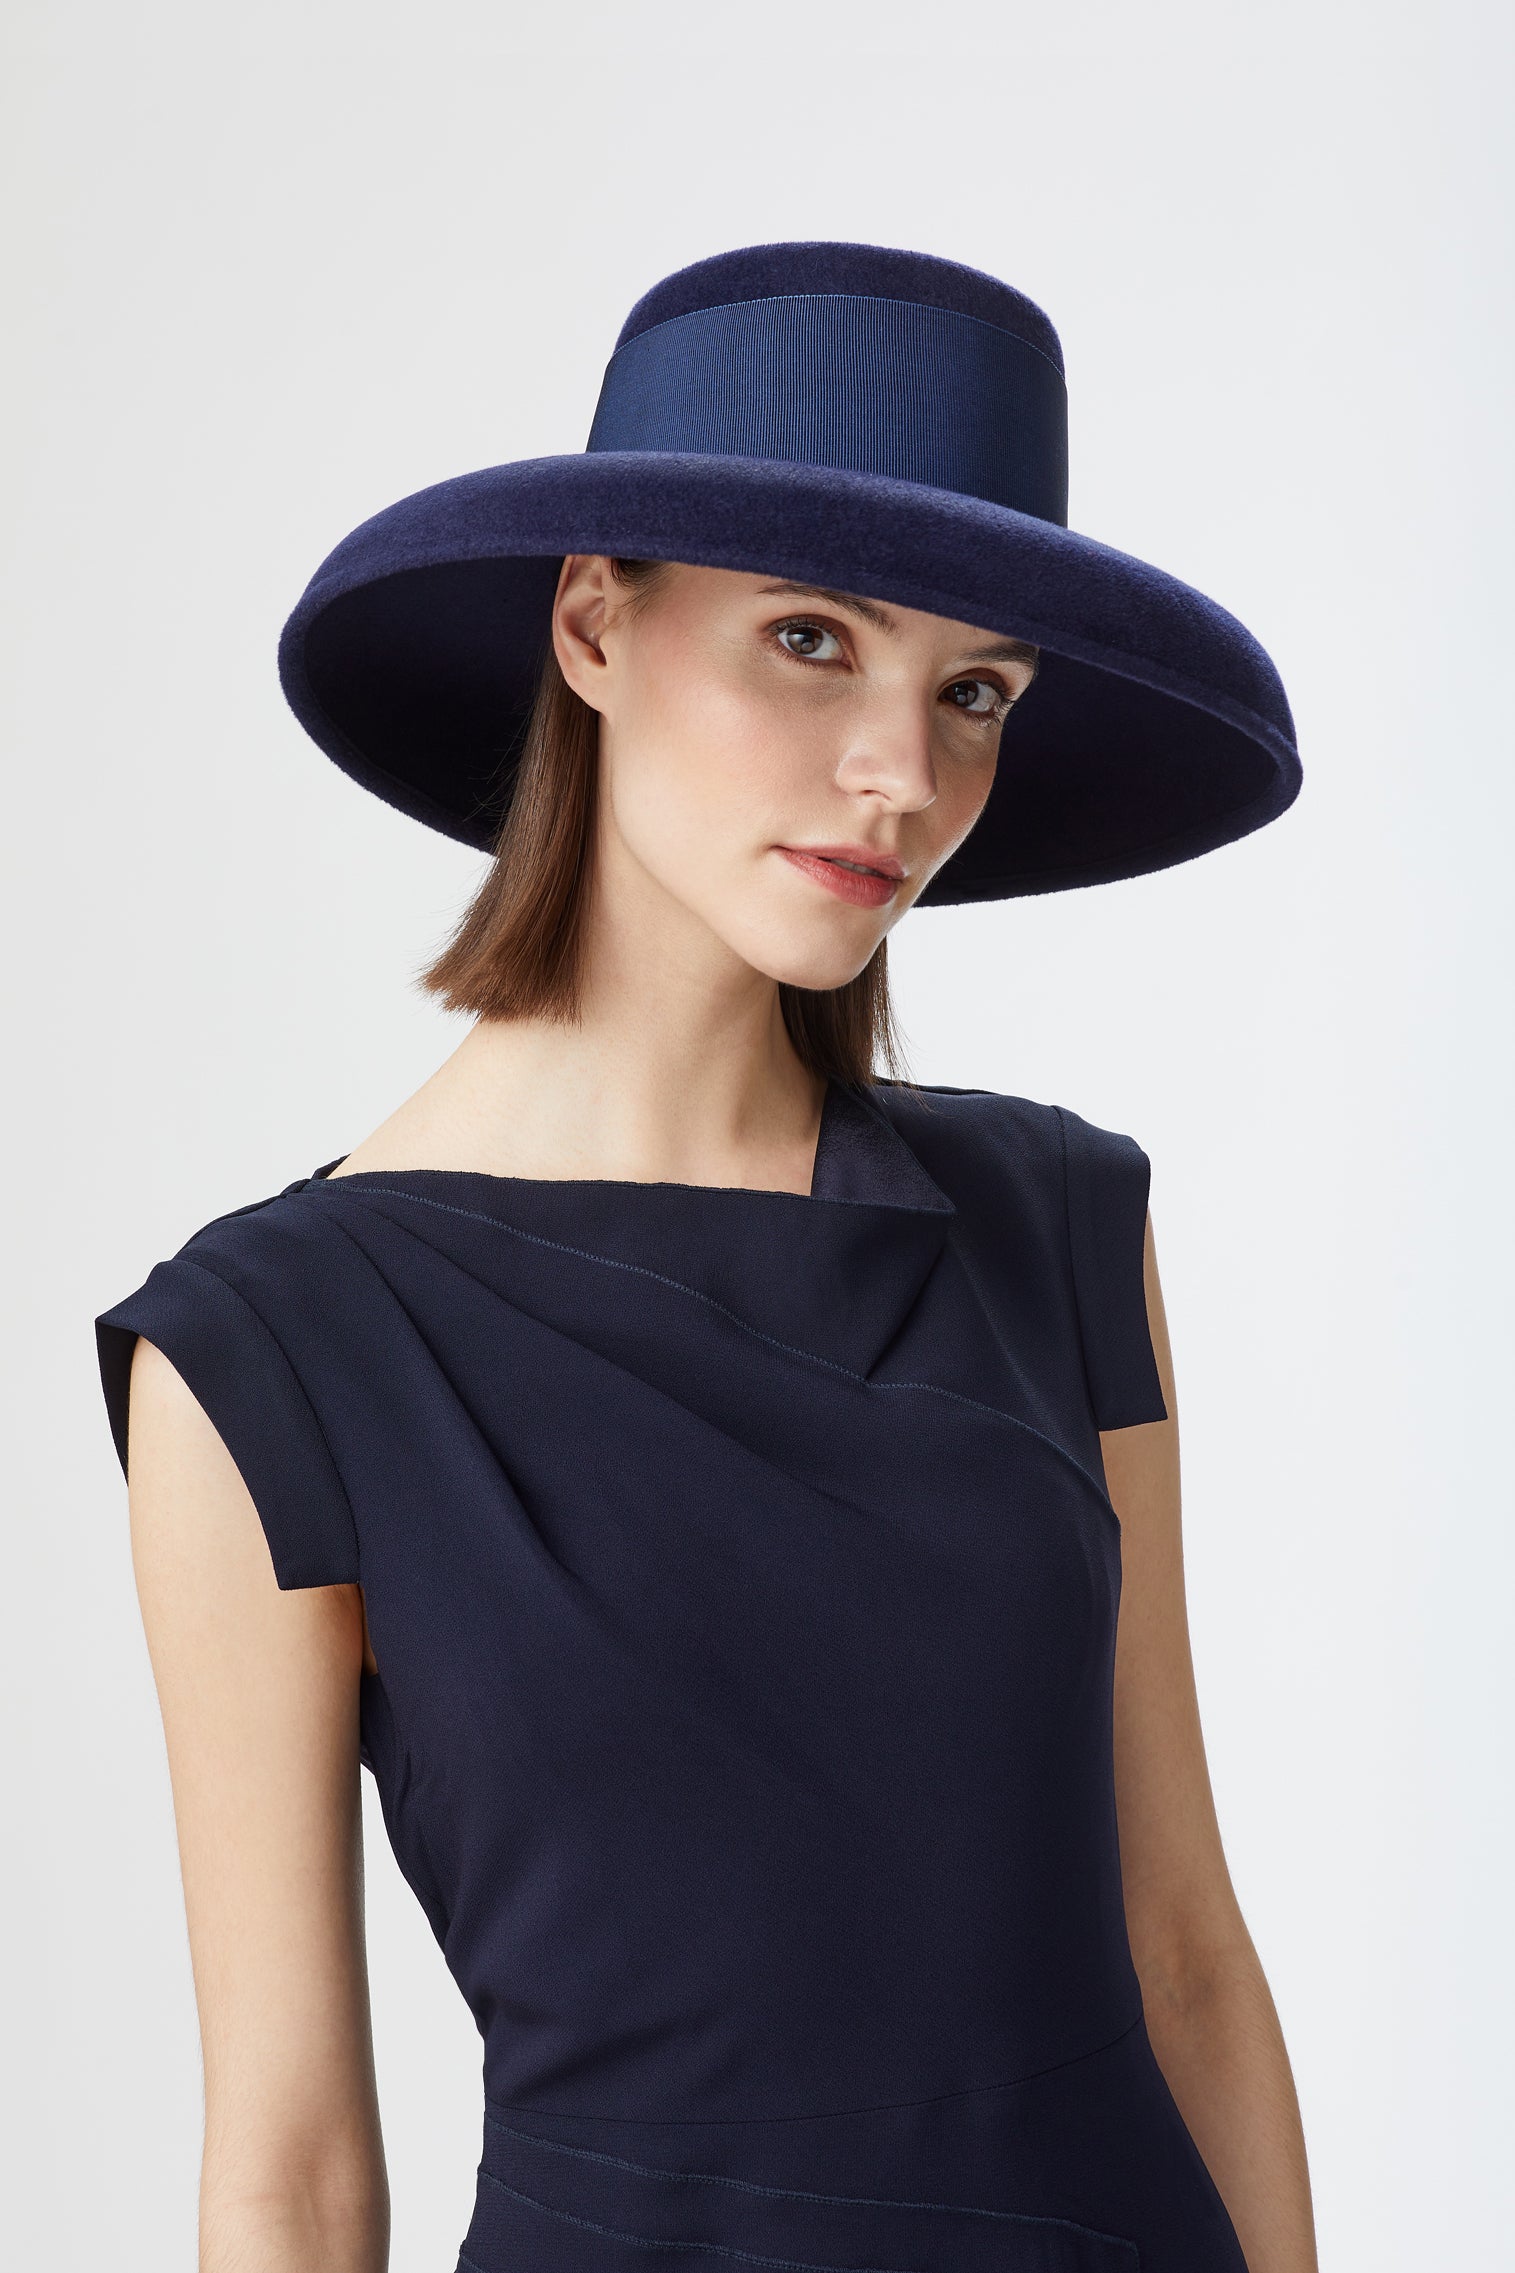 Tiffany Drop-Brim Hat - Hats for Tall People - Lock & Co. Hatters London UK